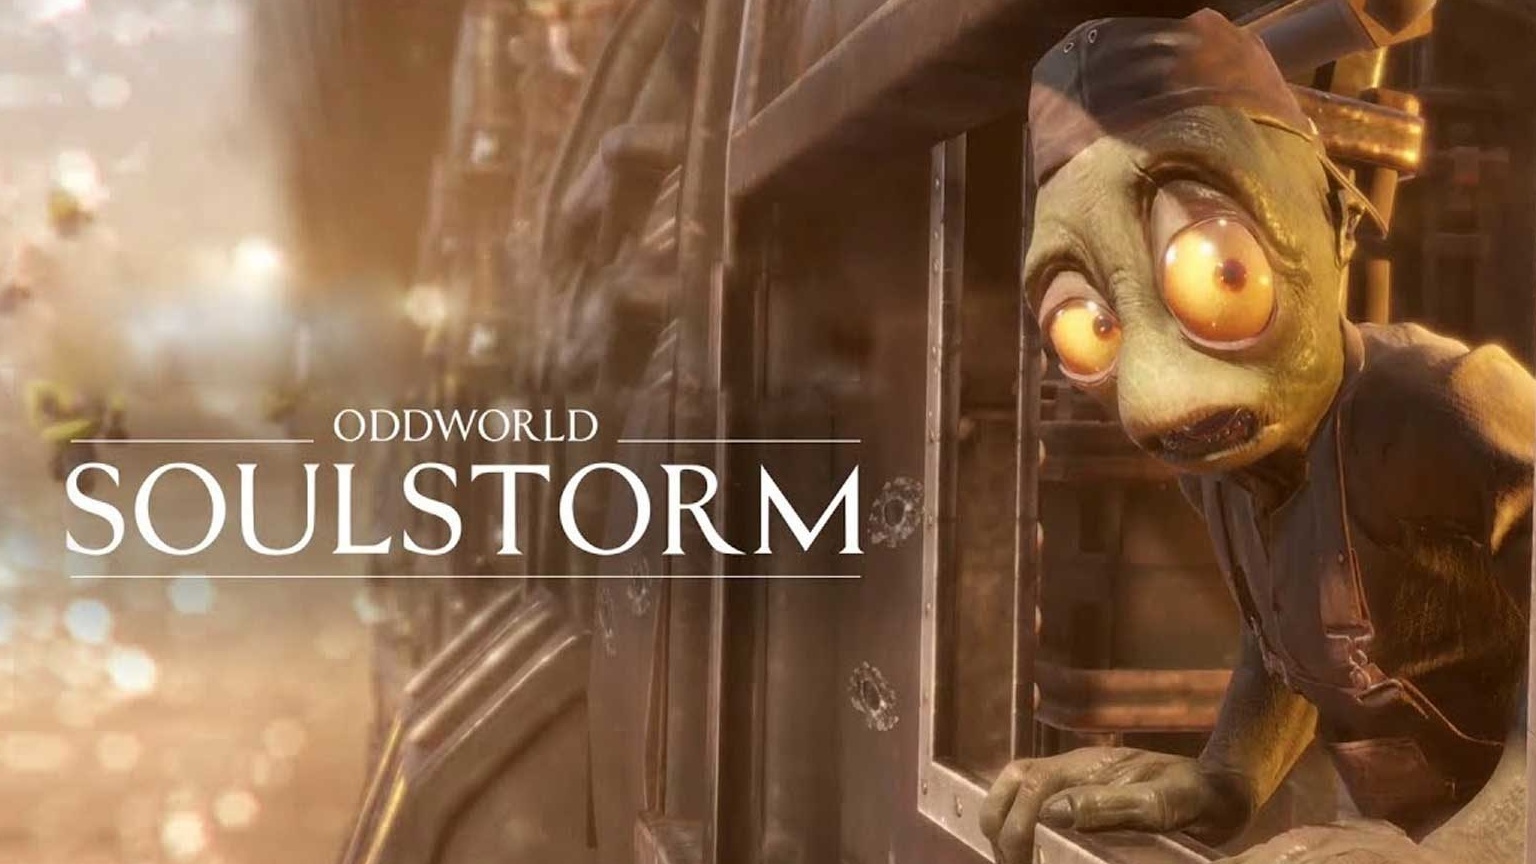 New footage of Oddworld: Soulstorm